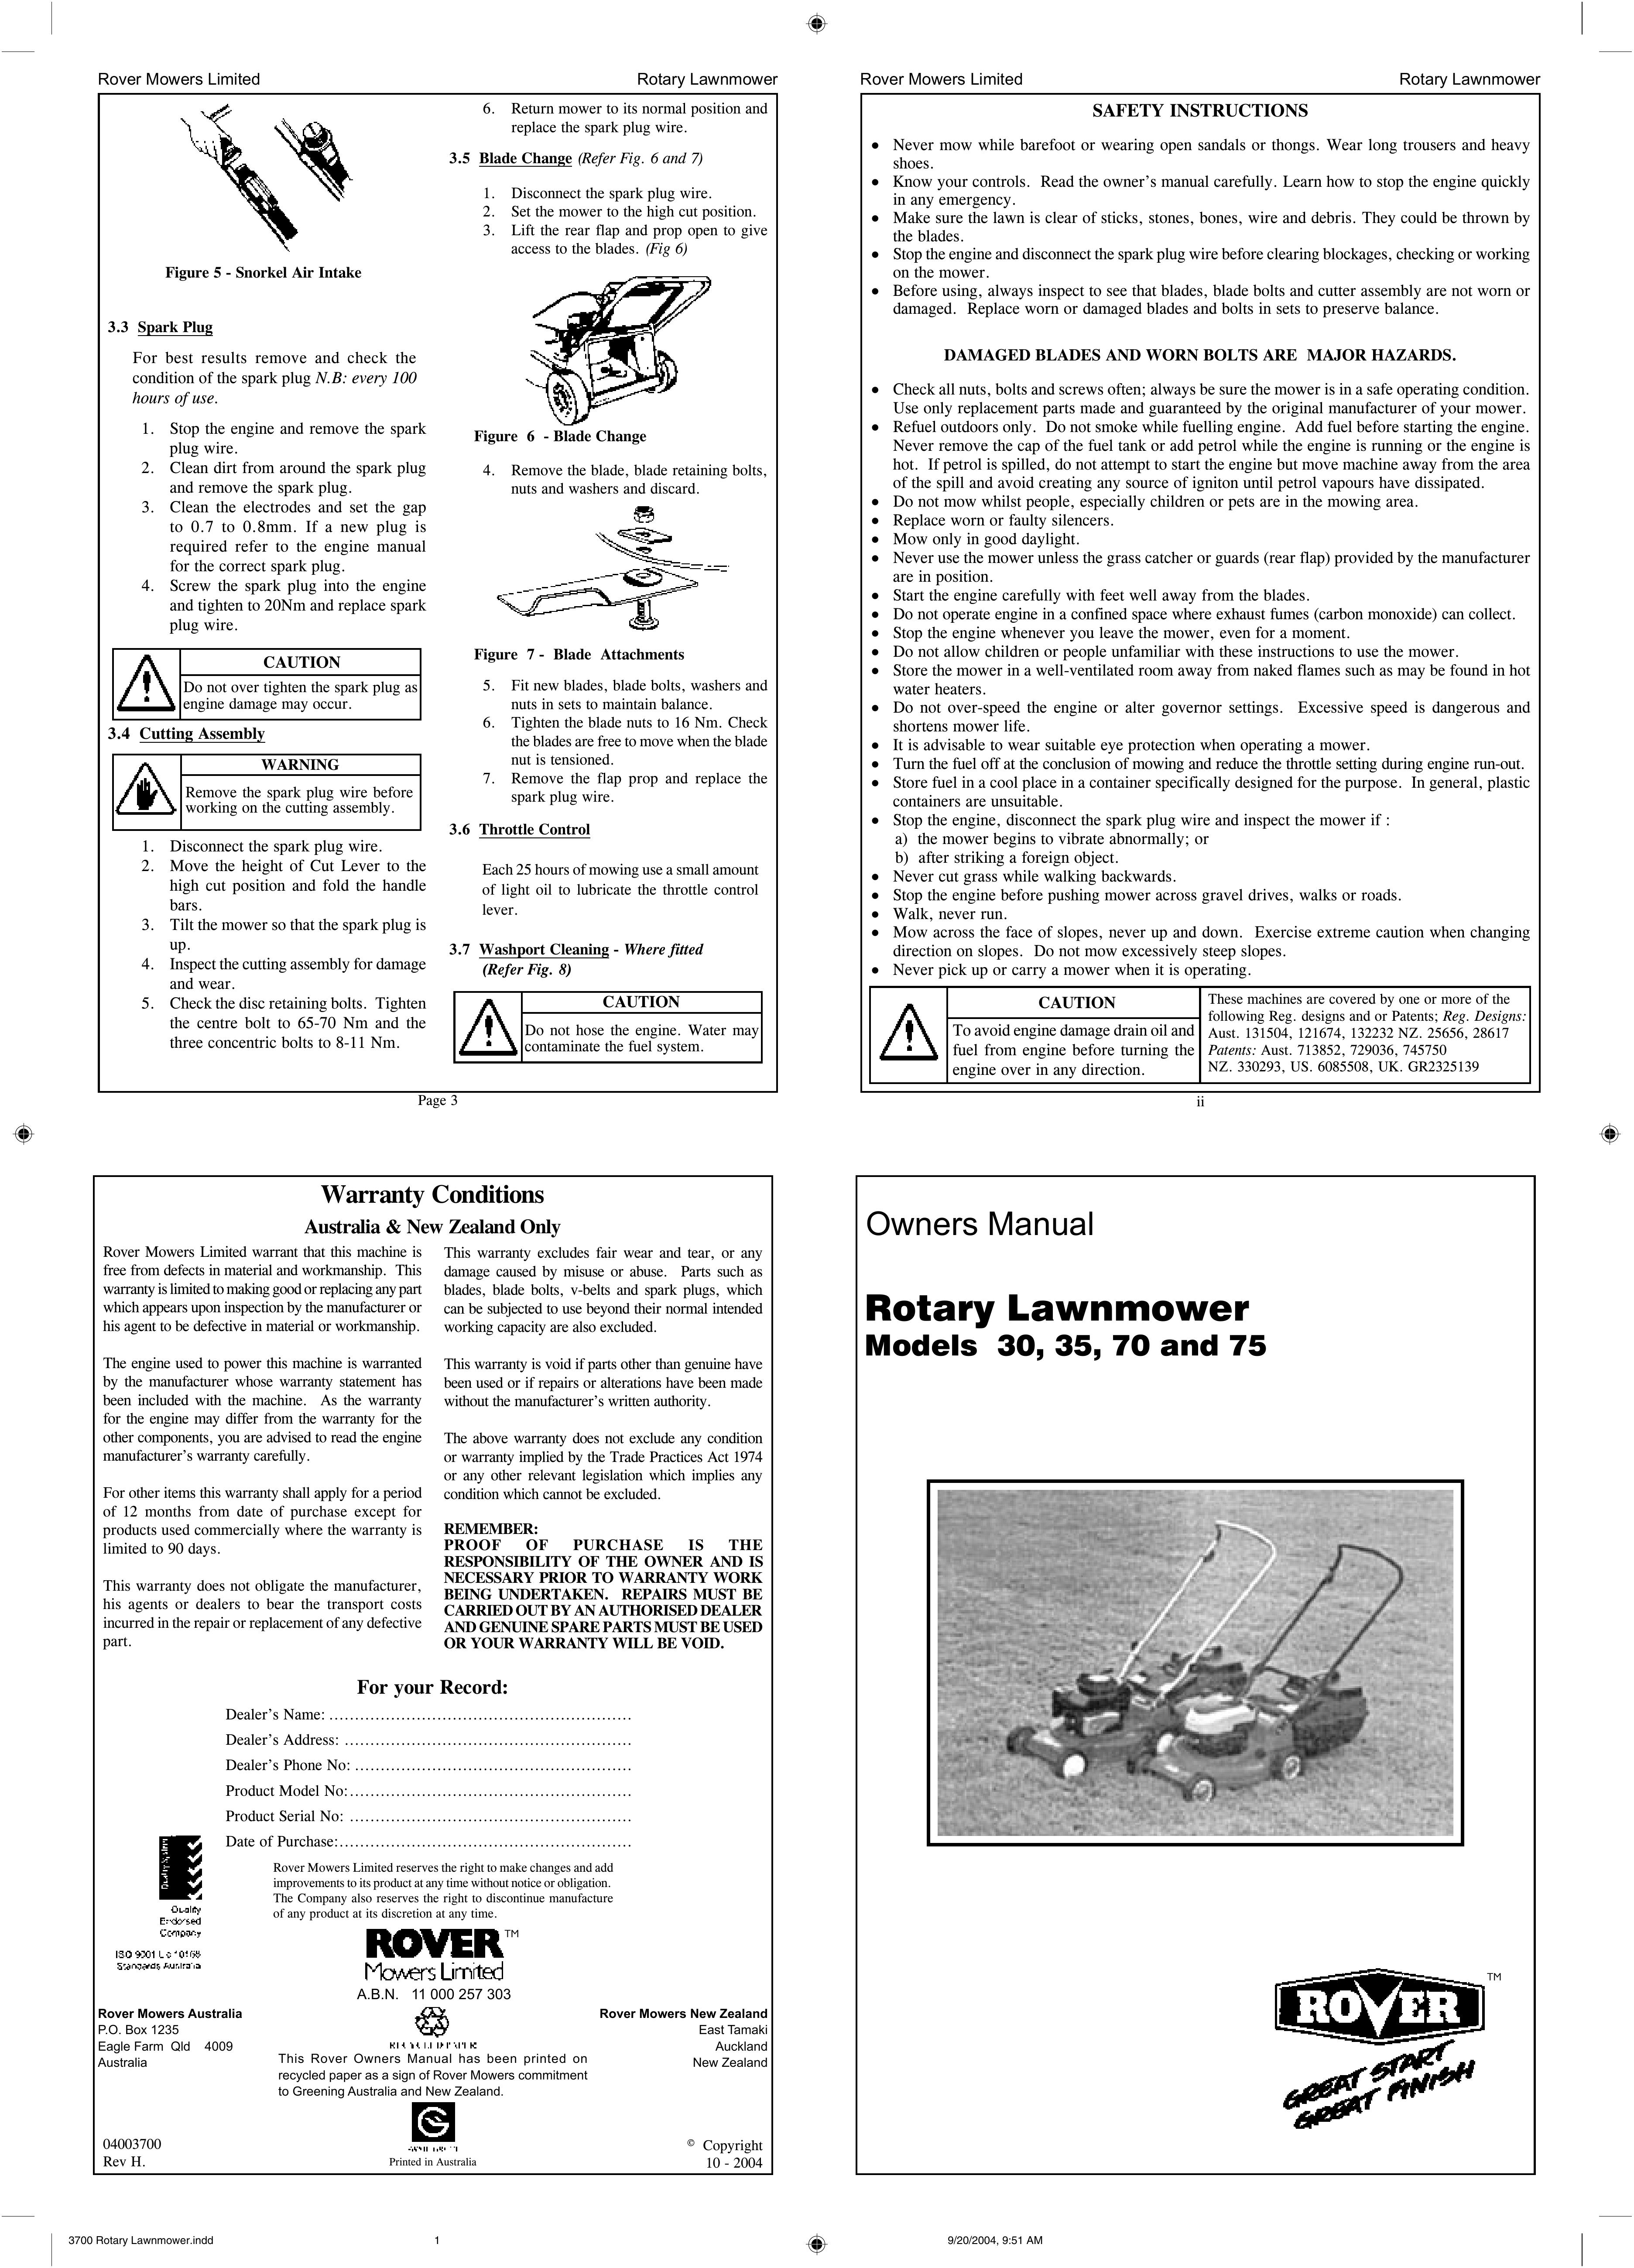 Rover 30, 35, 70, 75 Lawn Mower User Manual